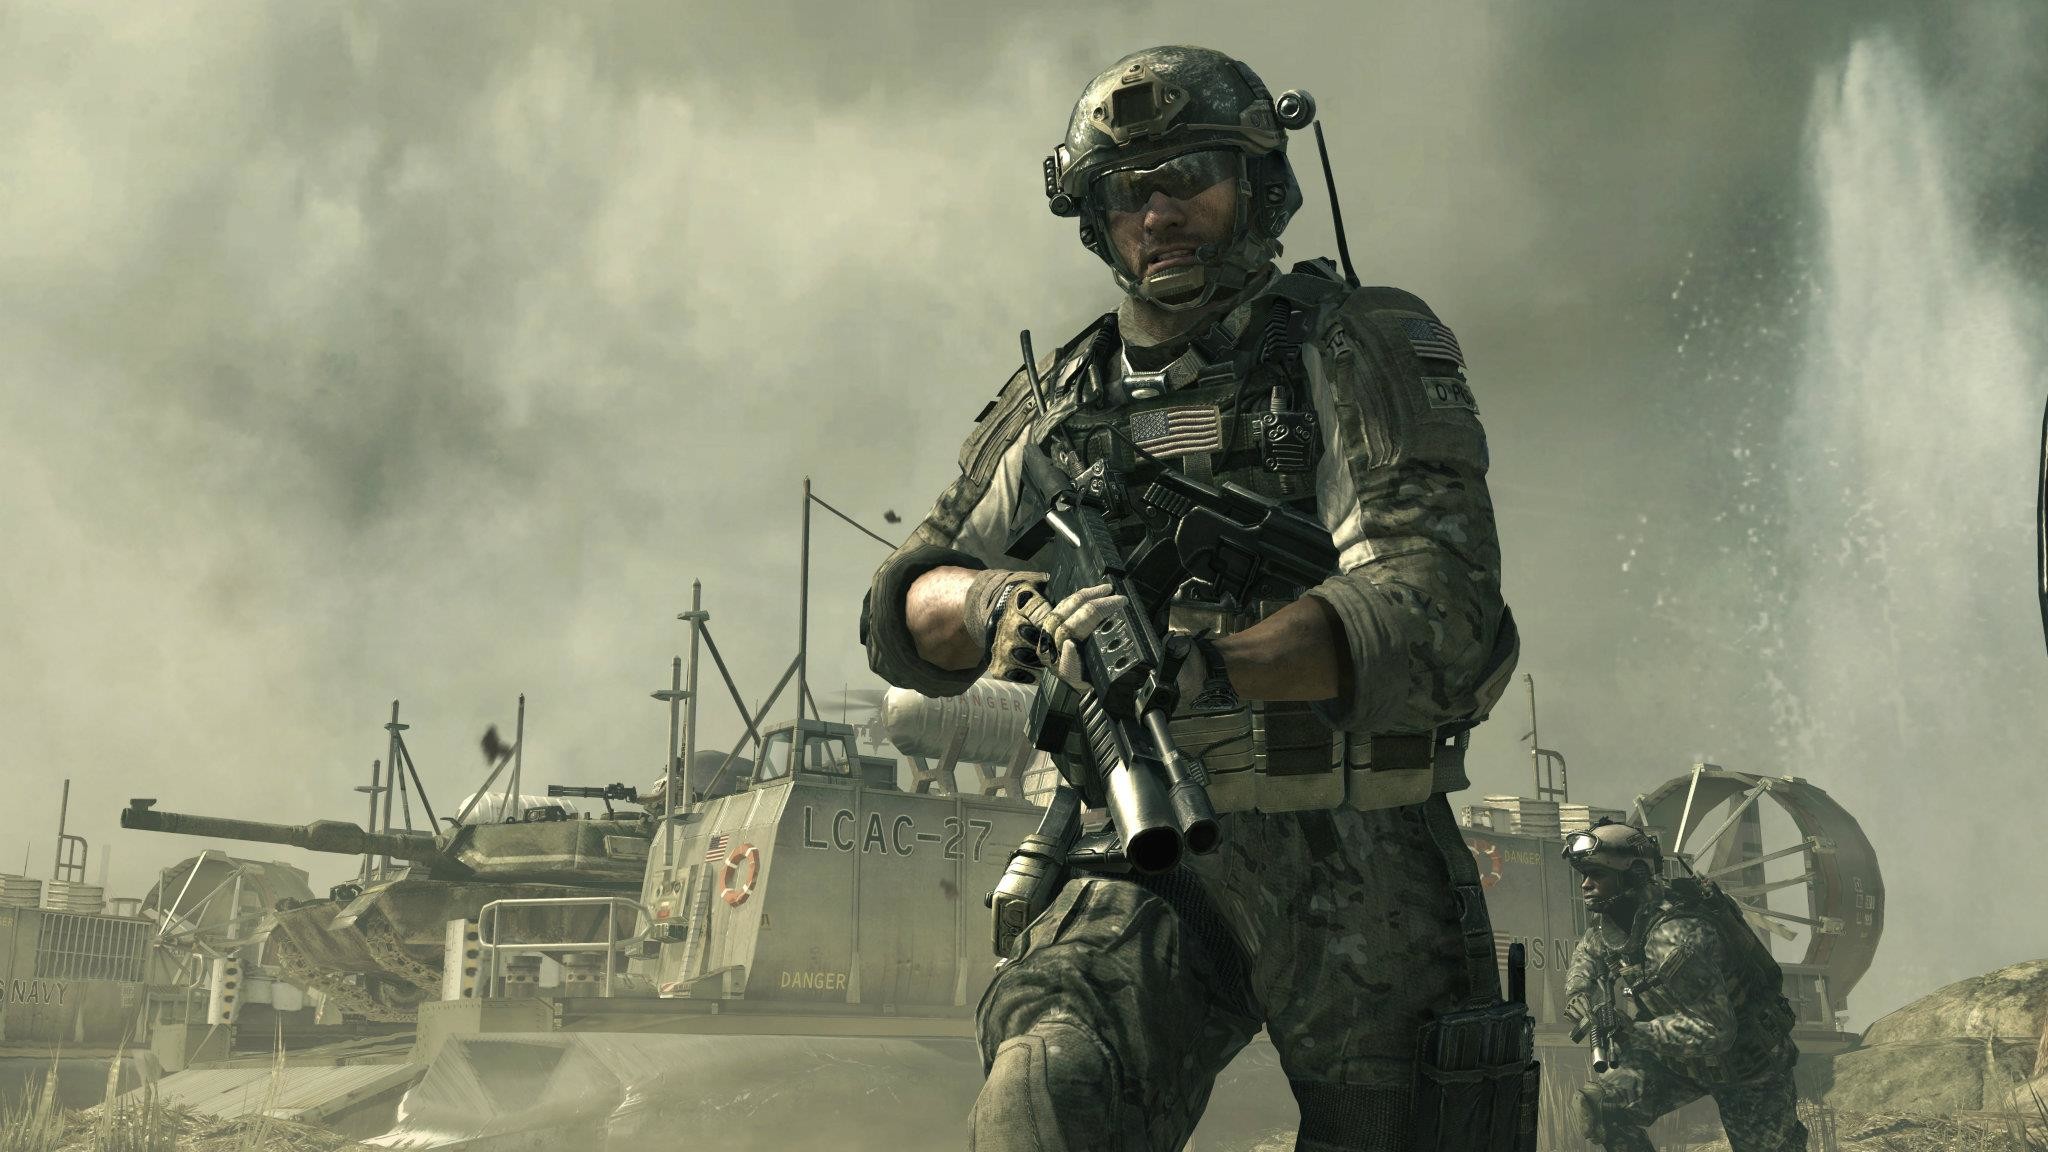 2048x1152 COD~Modern Warfare 3 images Sandman HD wallpaper and background photos